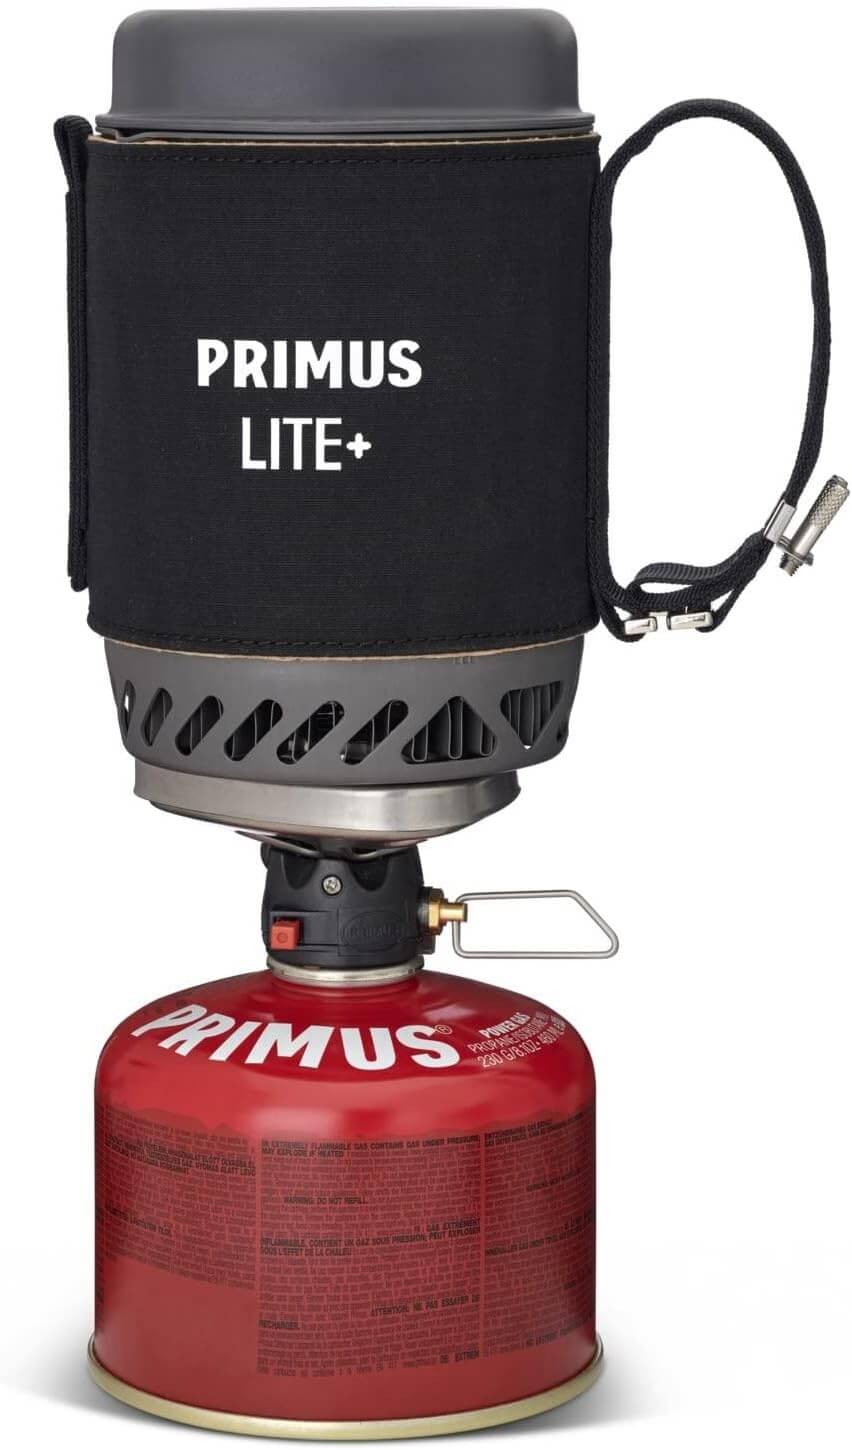 Primus Lite Plus Kocherset Stove System